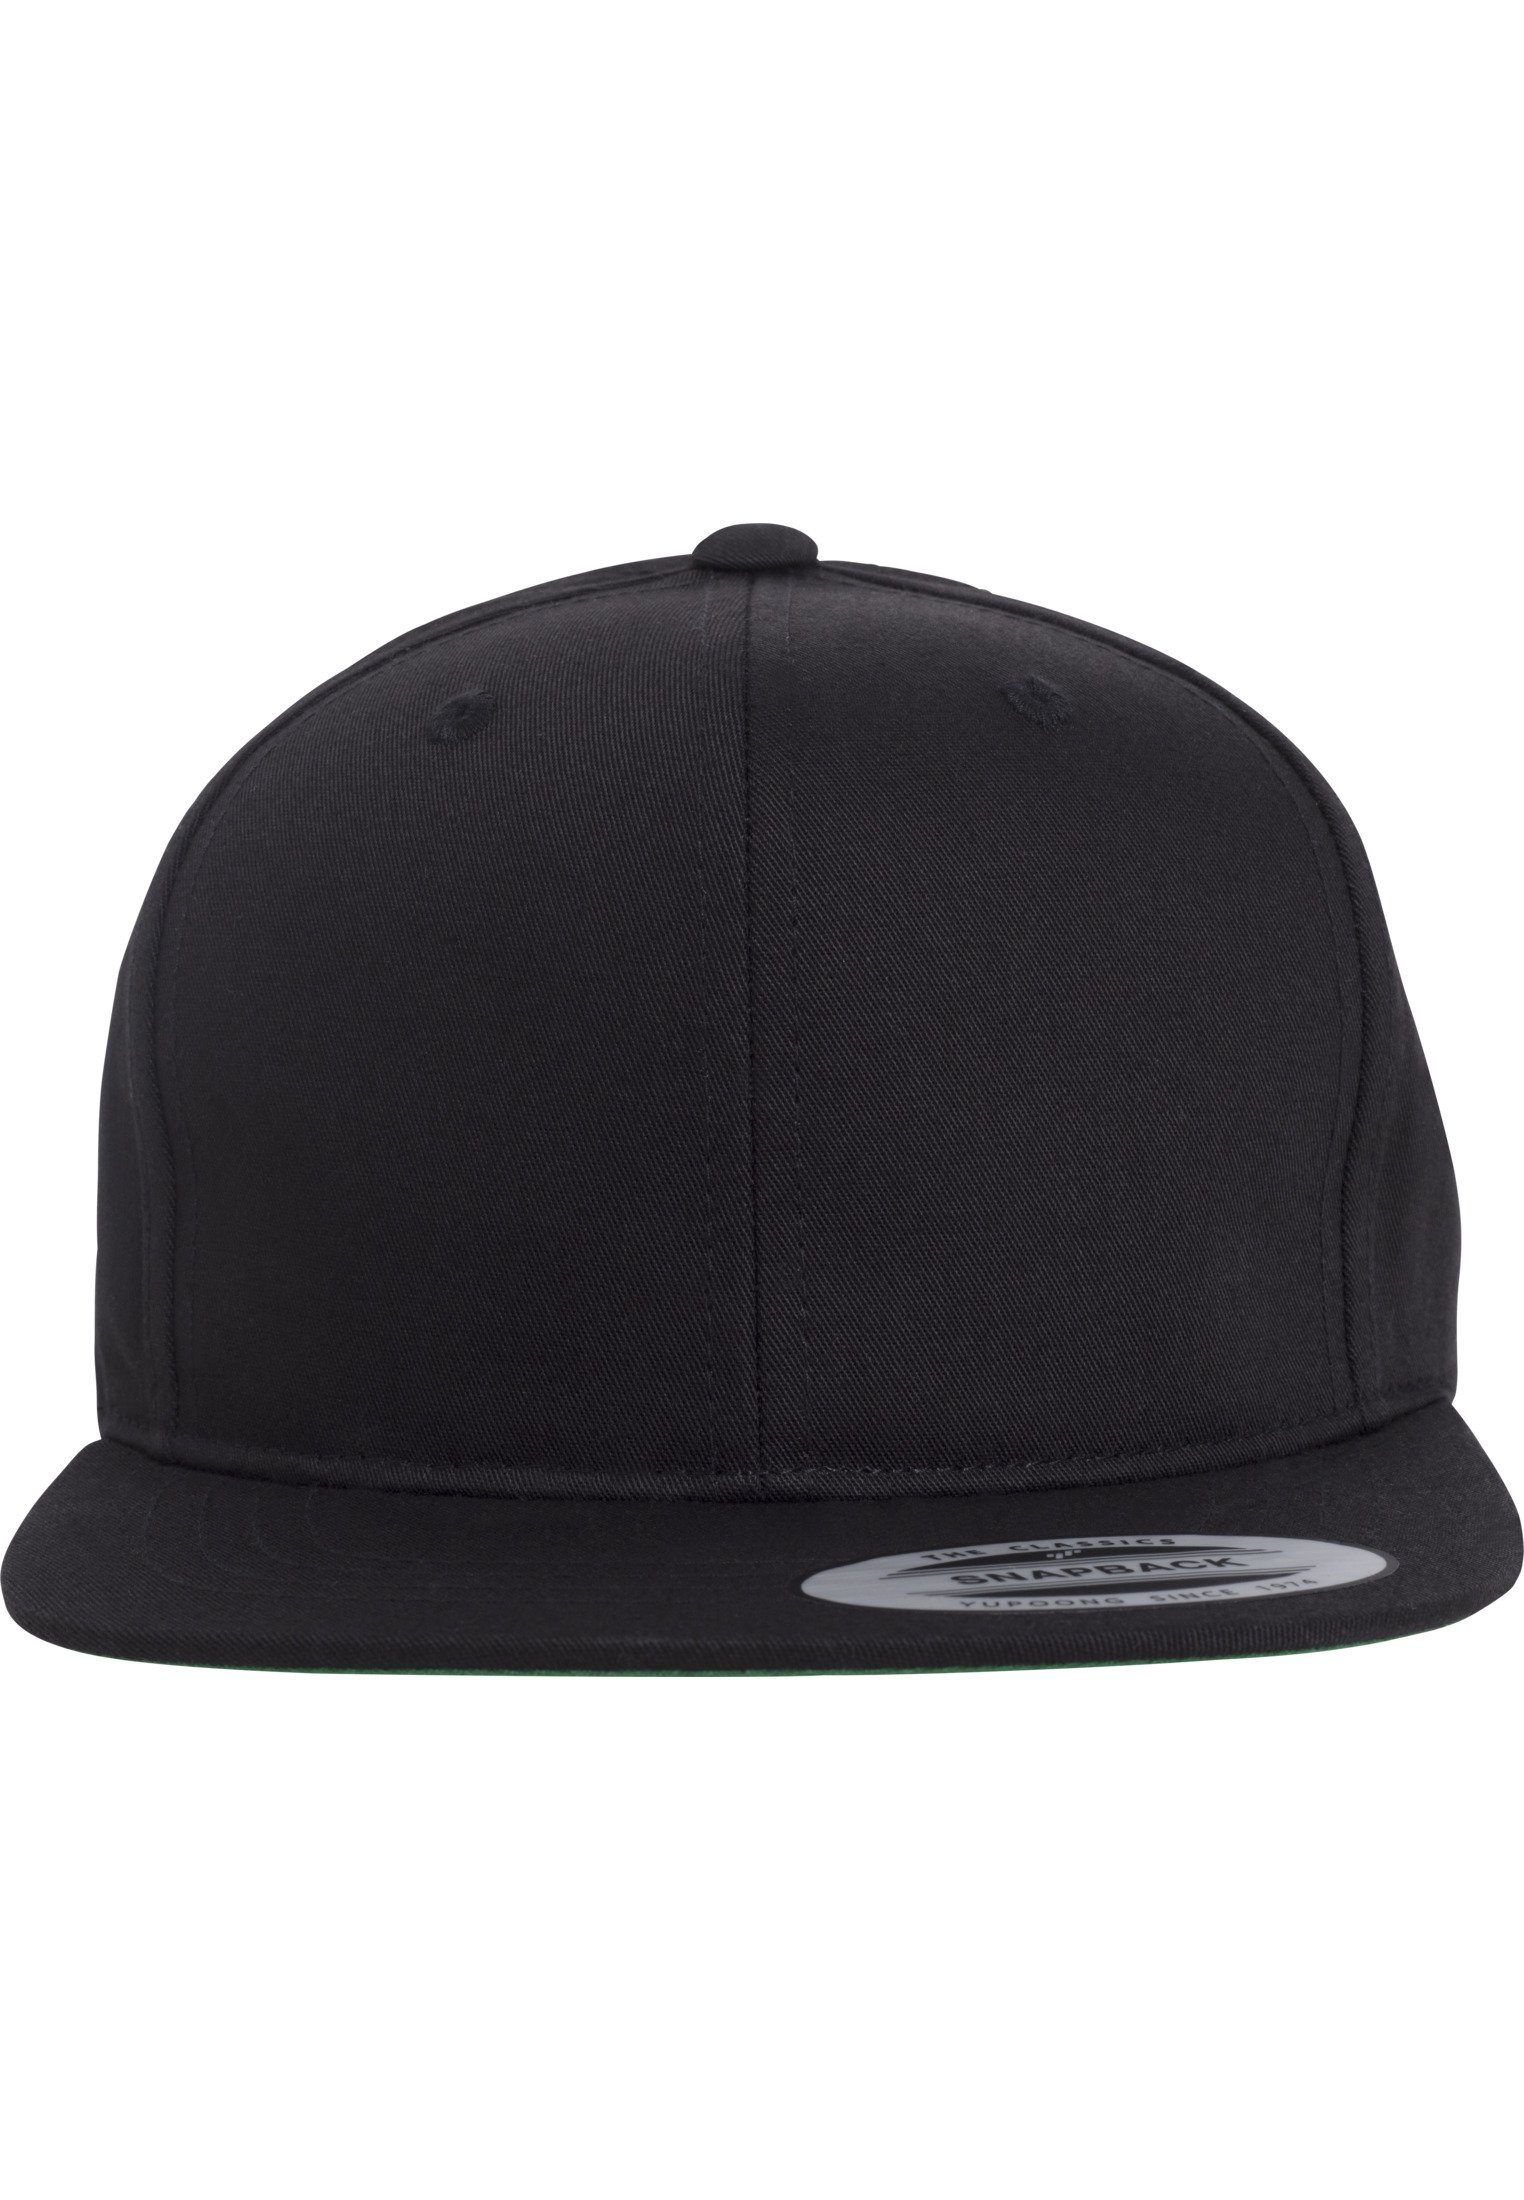 Flexfit Flex Snapback Snapback Youth black Cap Twill Pro-Style Cap